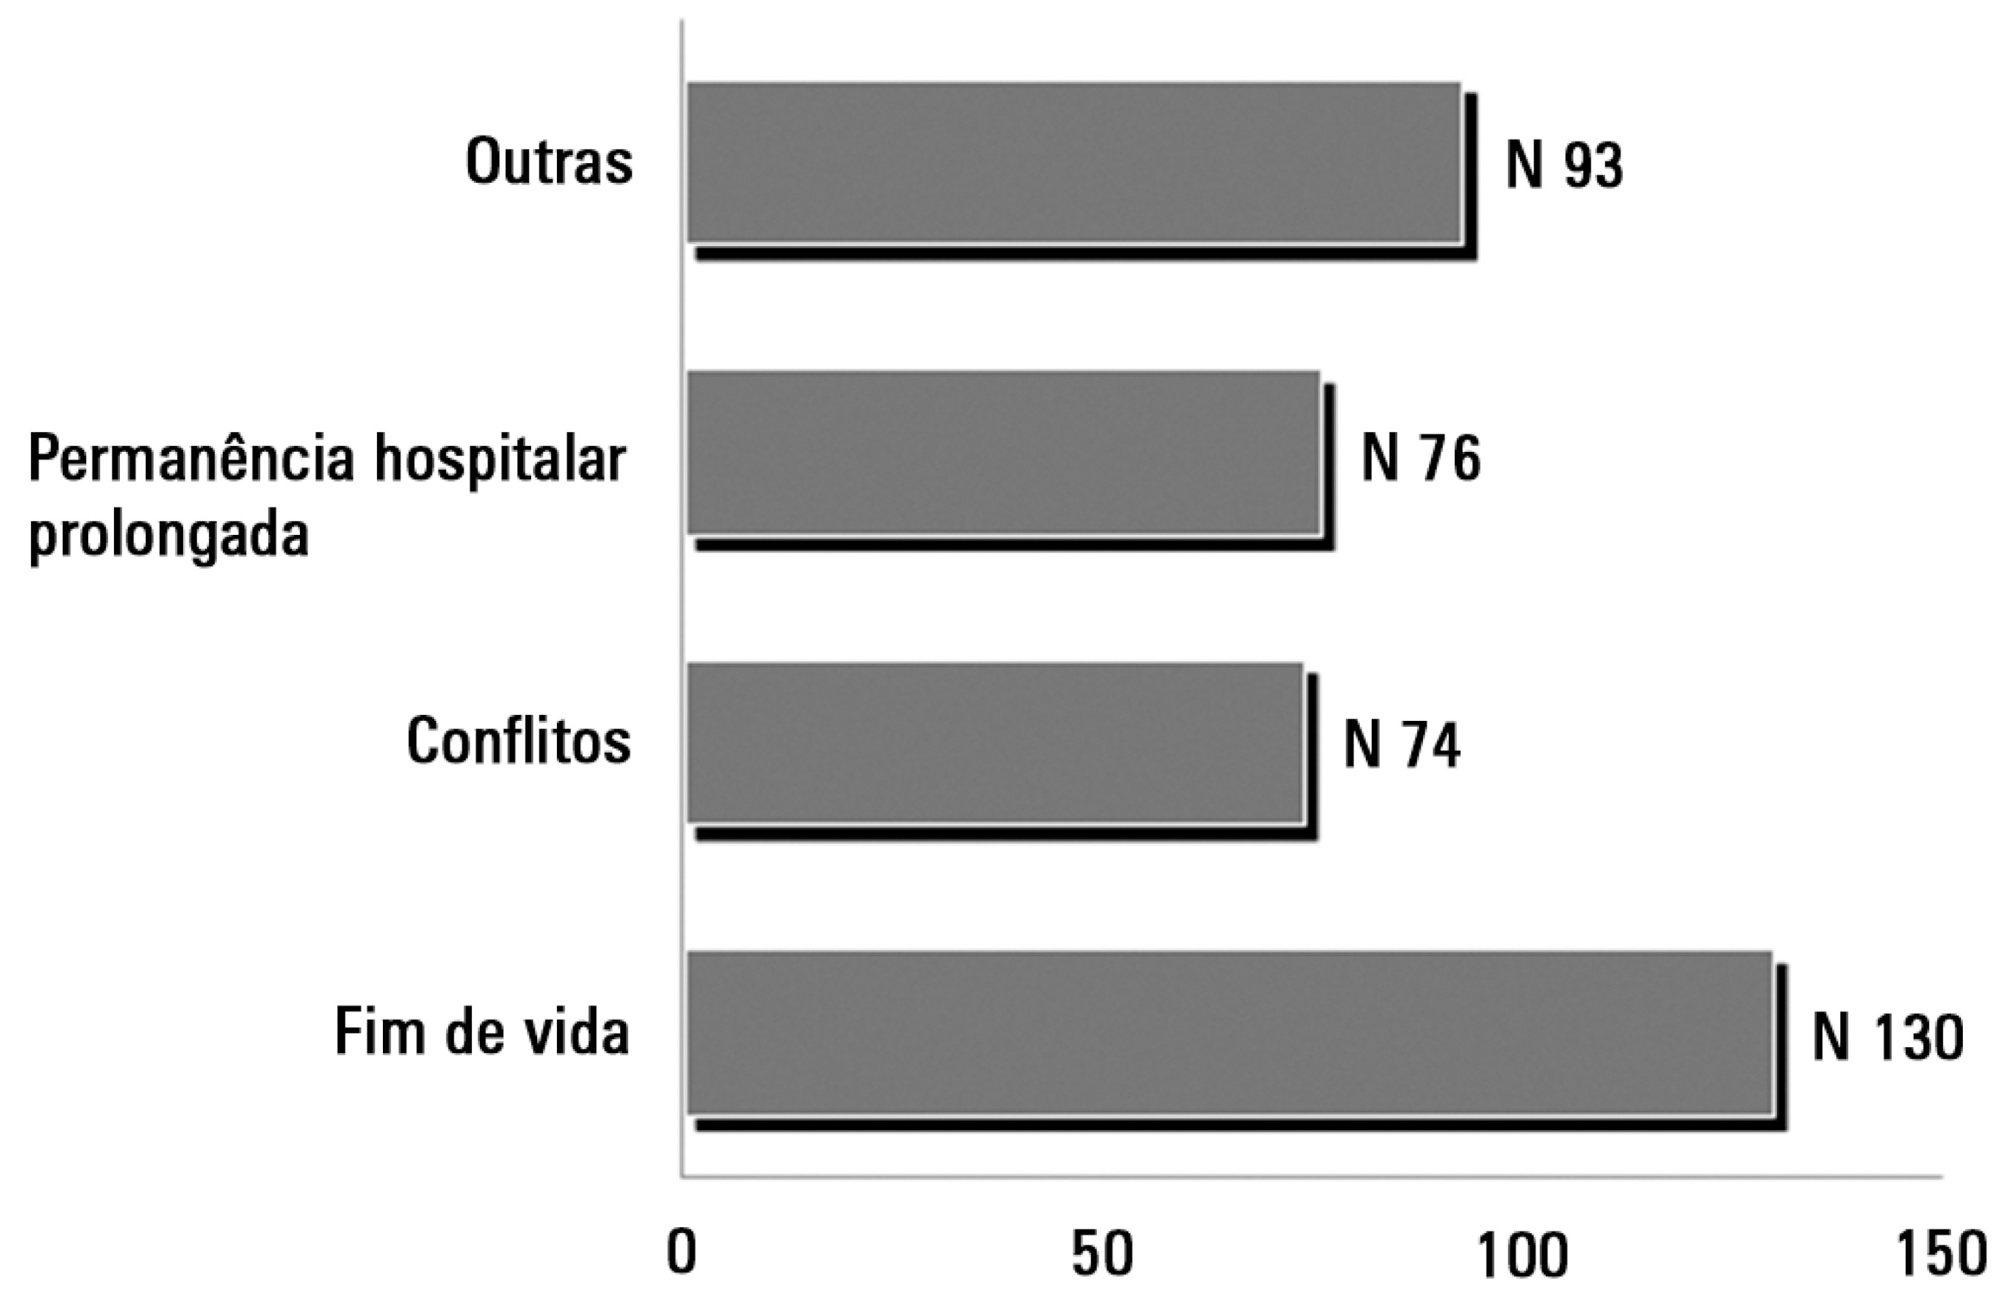 Intensive care unit visitation policies in Brazil: a multicenter
               survey